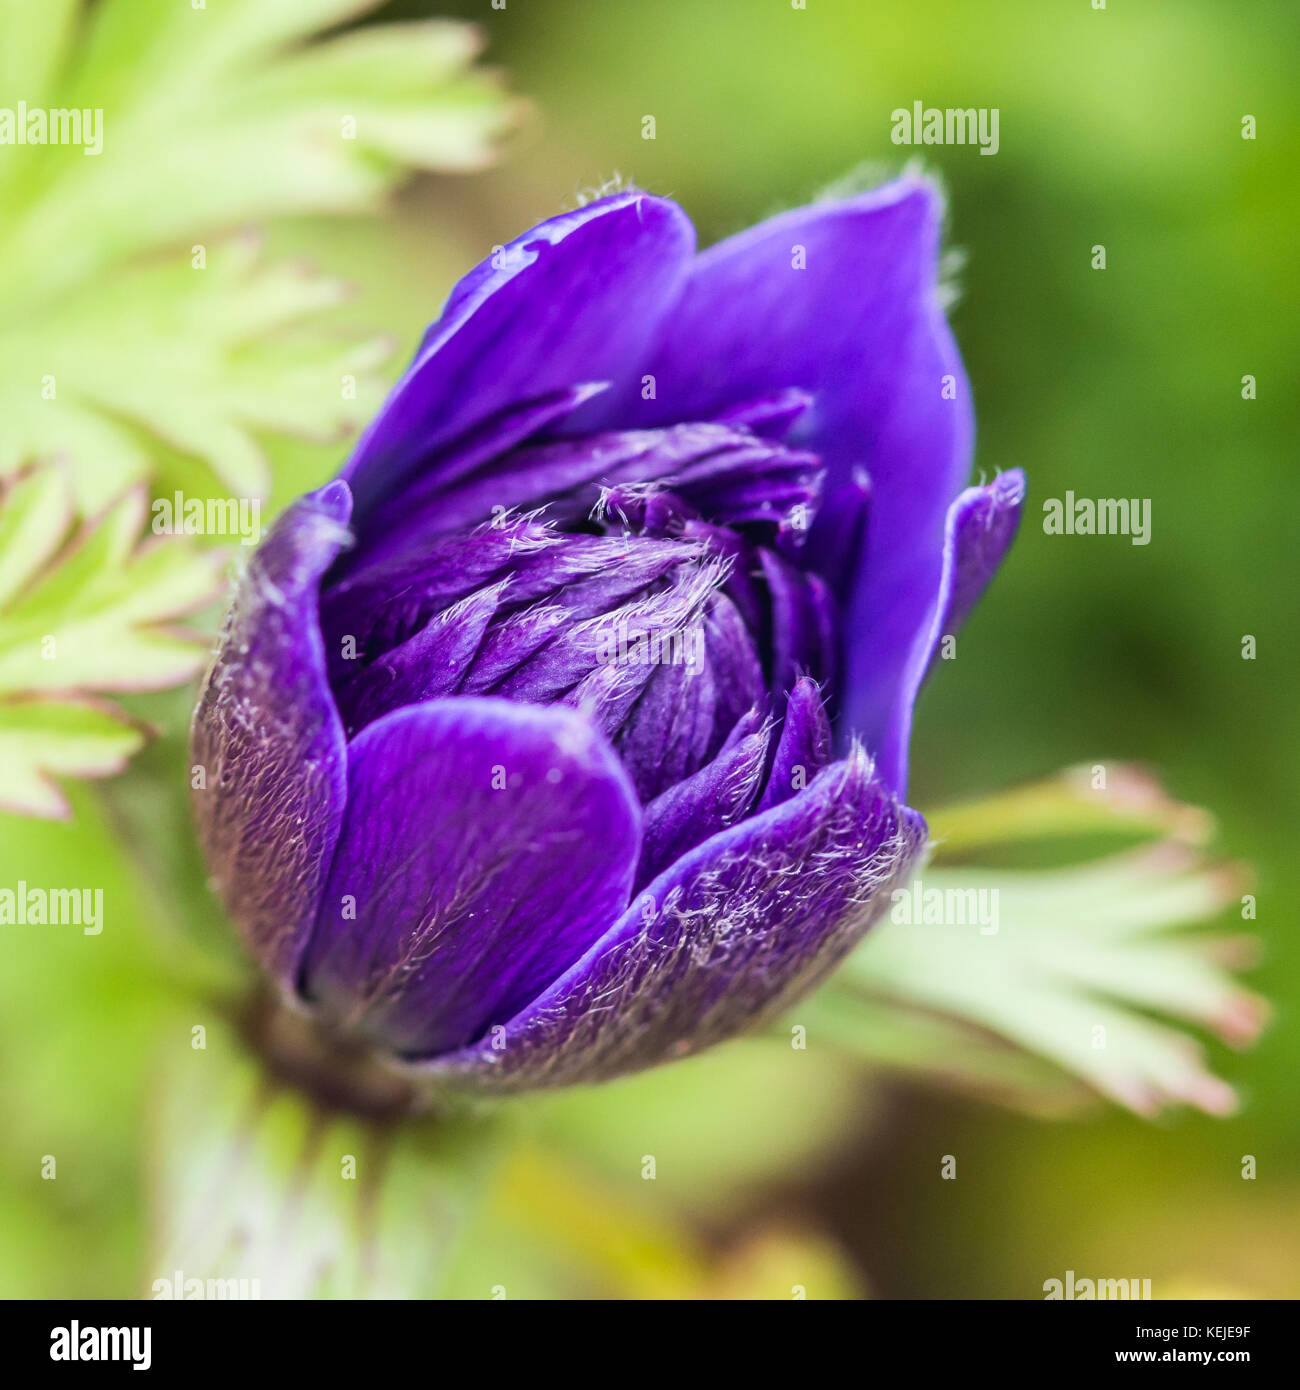 A macro shot of a purple anemone flower bud. Stock Photo